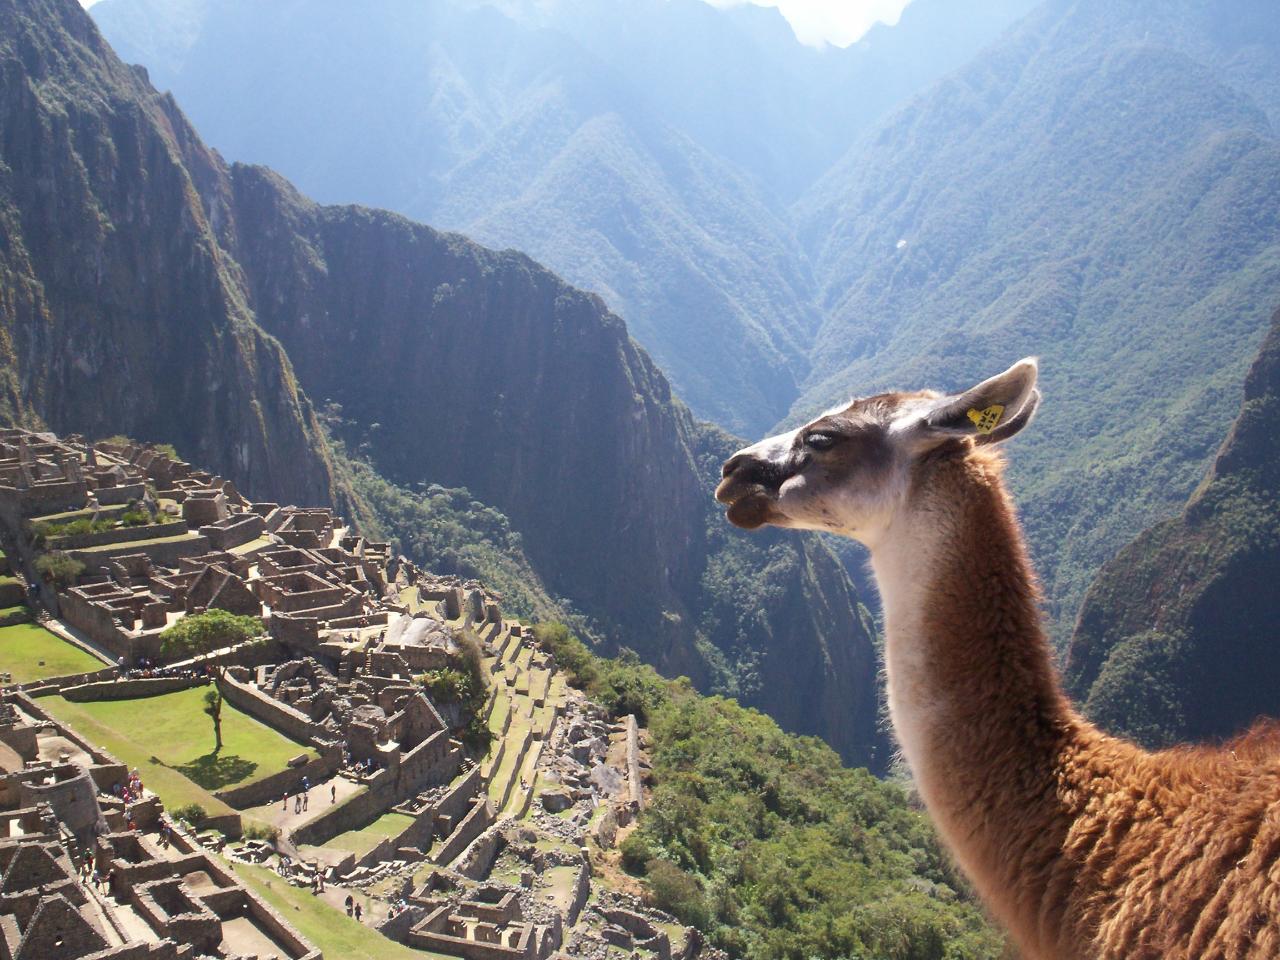  Luxury Collection - Machu Picchu & Uyuni Salt Flats Vacation - 11 Days